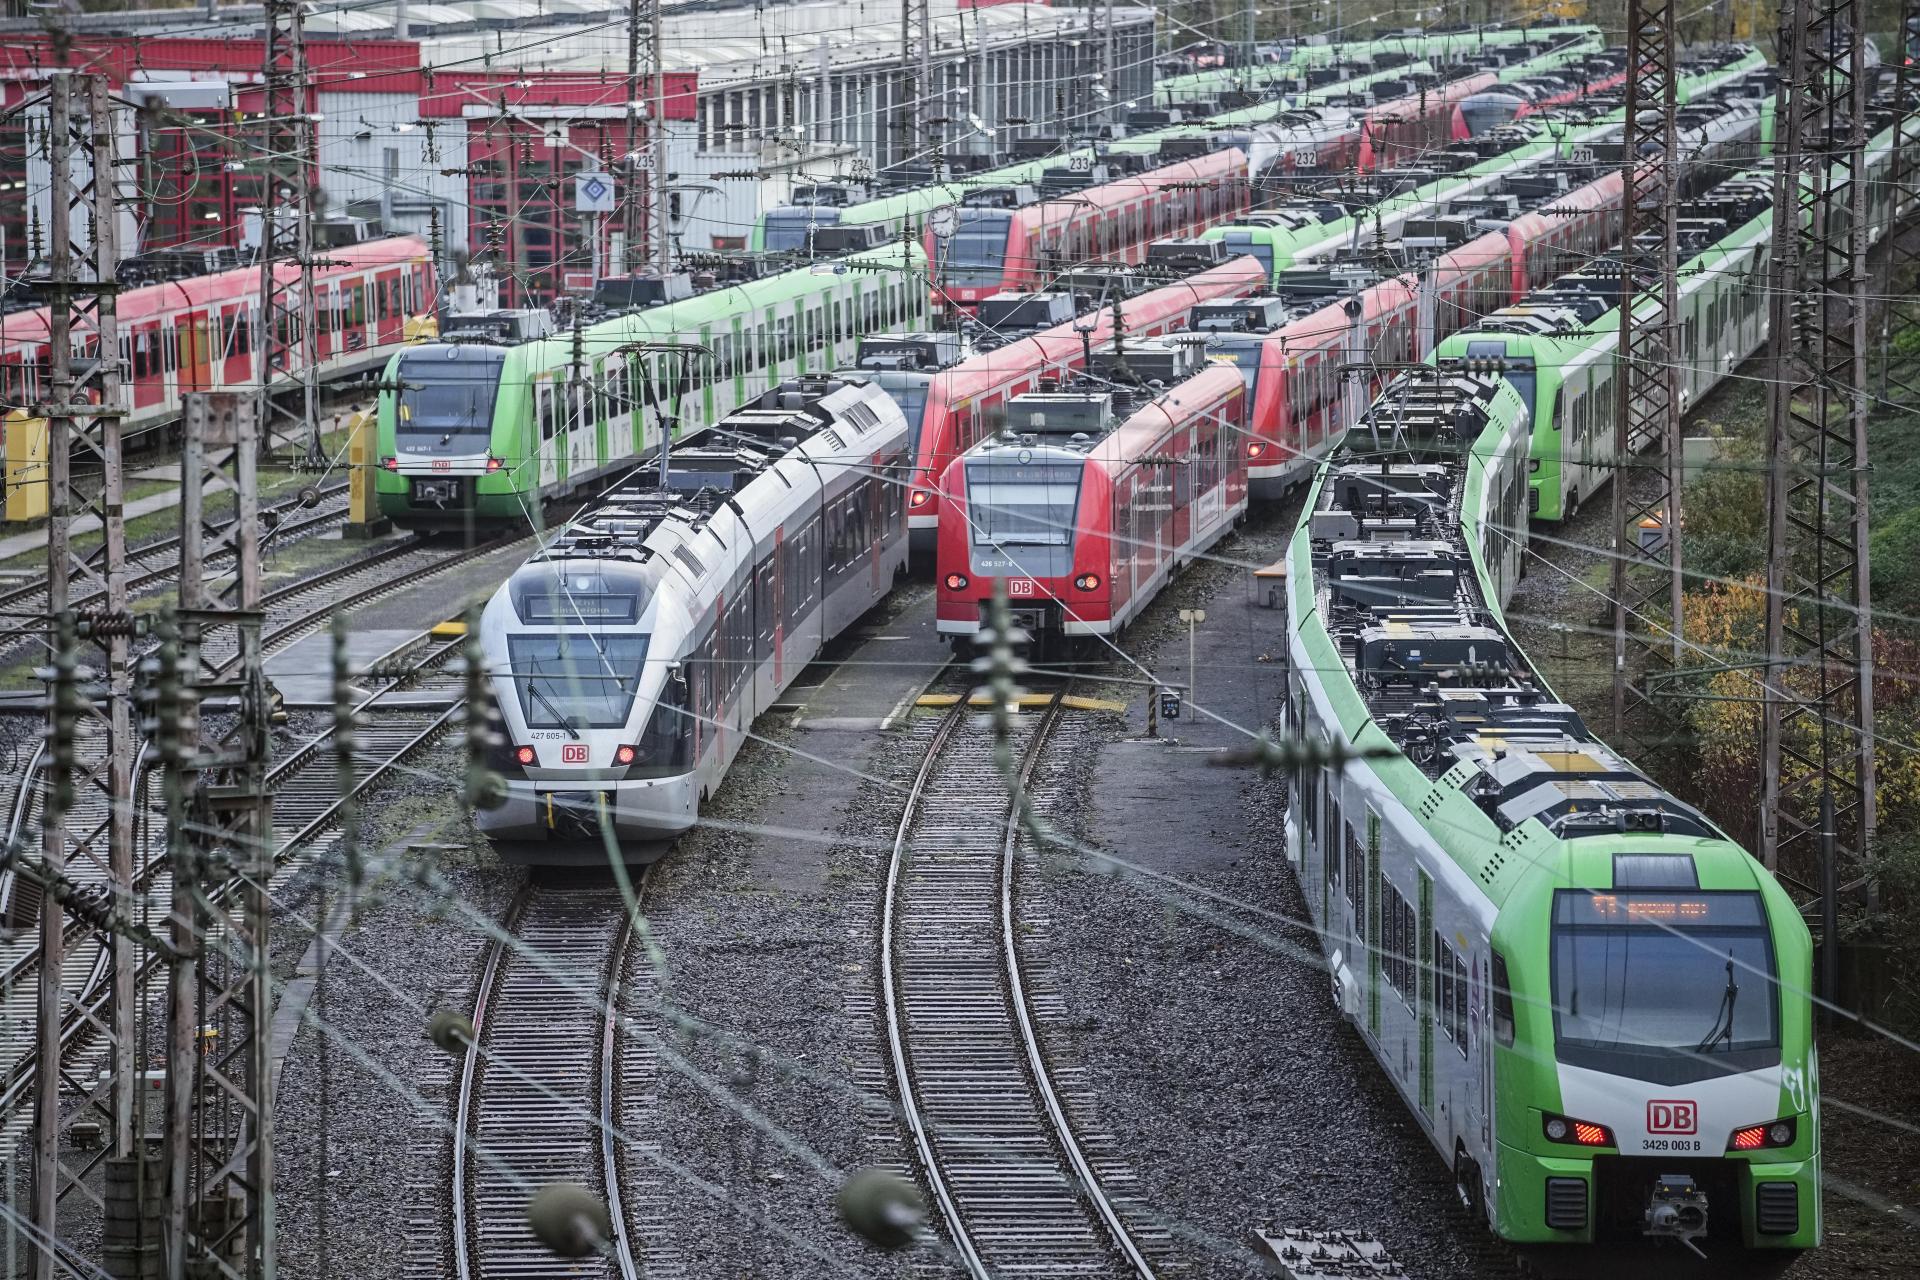 Nemecnej železnici hrozí ďalší štrajk, ohlásil ho šéf odborov rušňovodičov